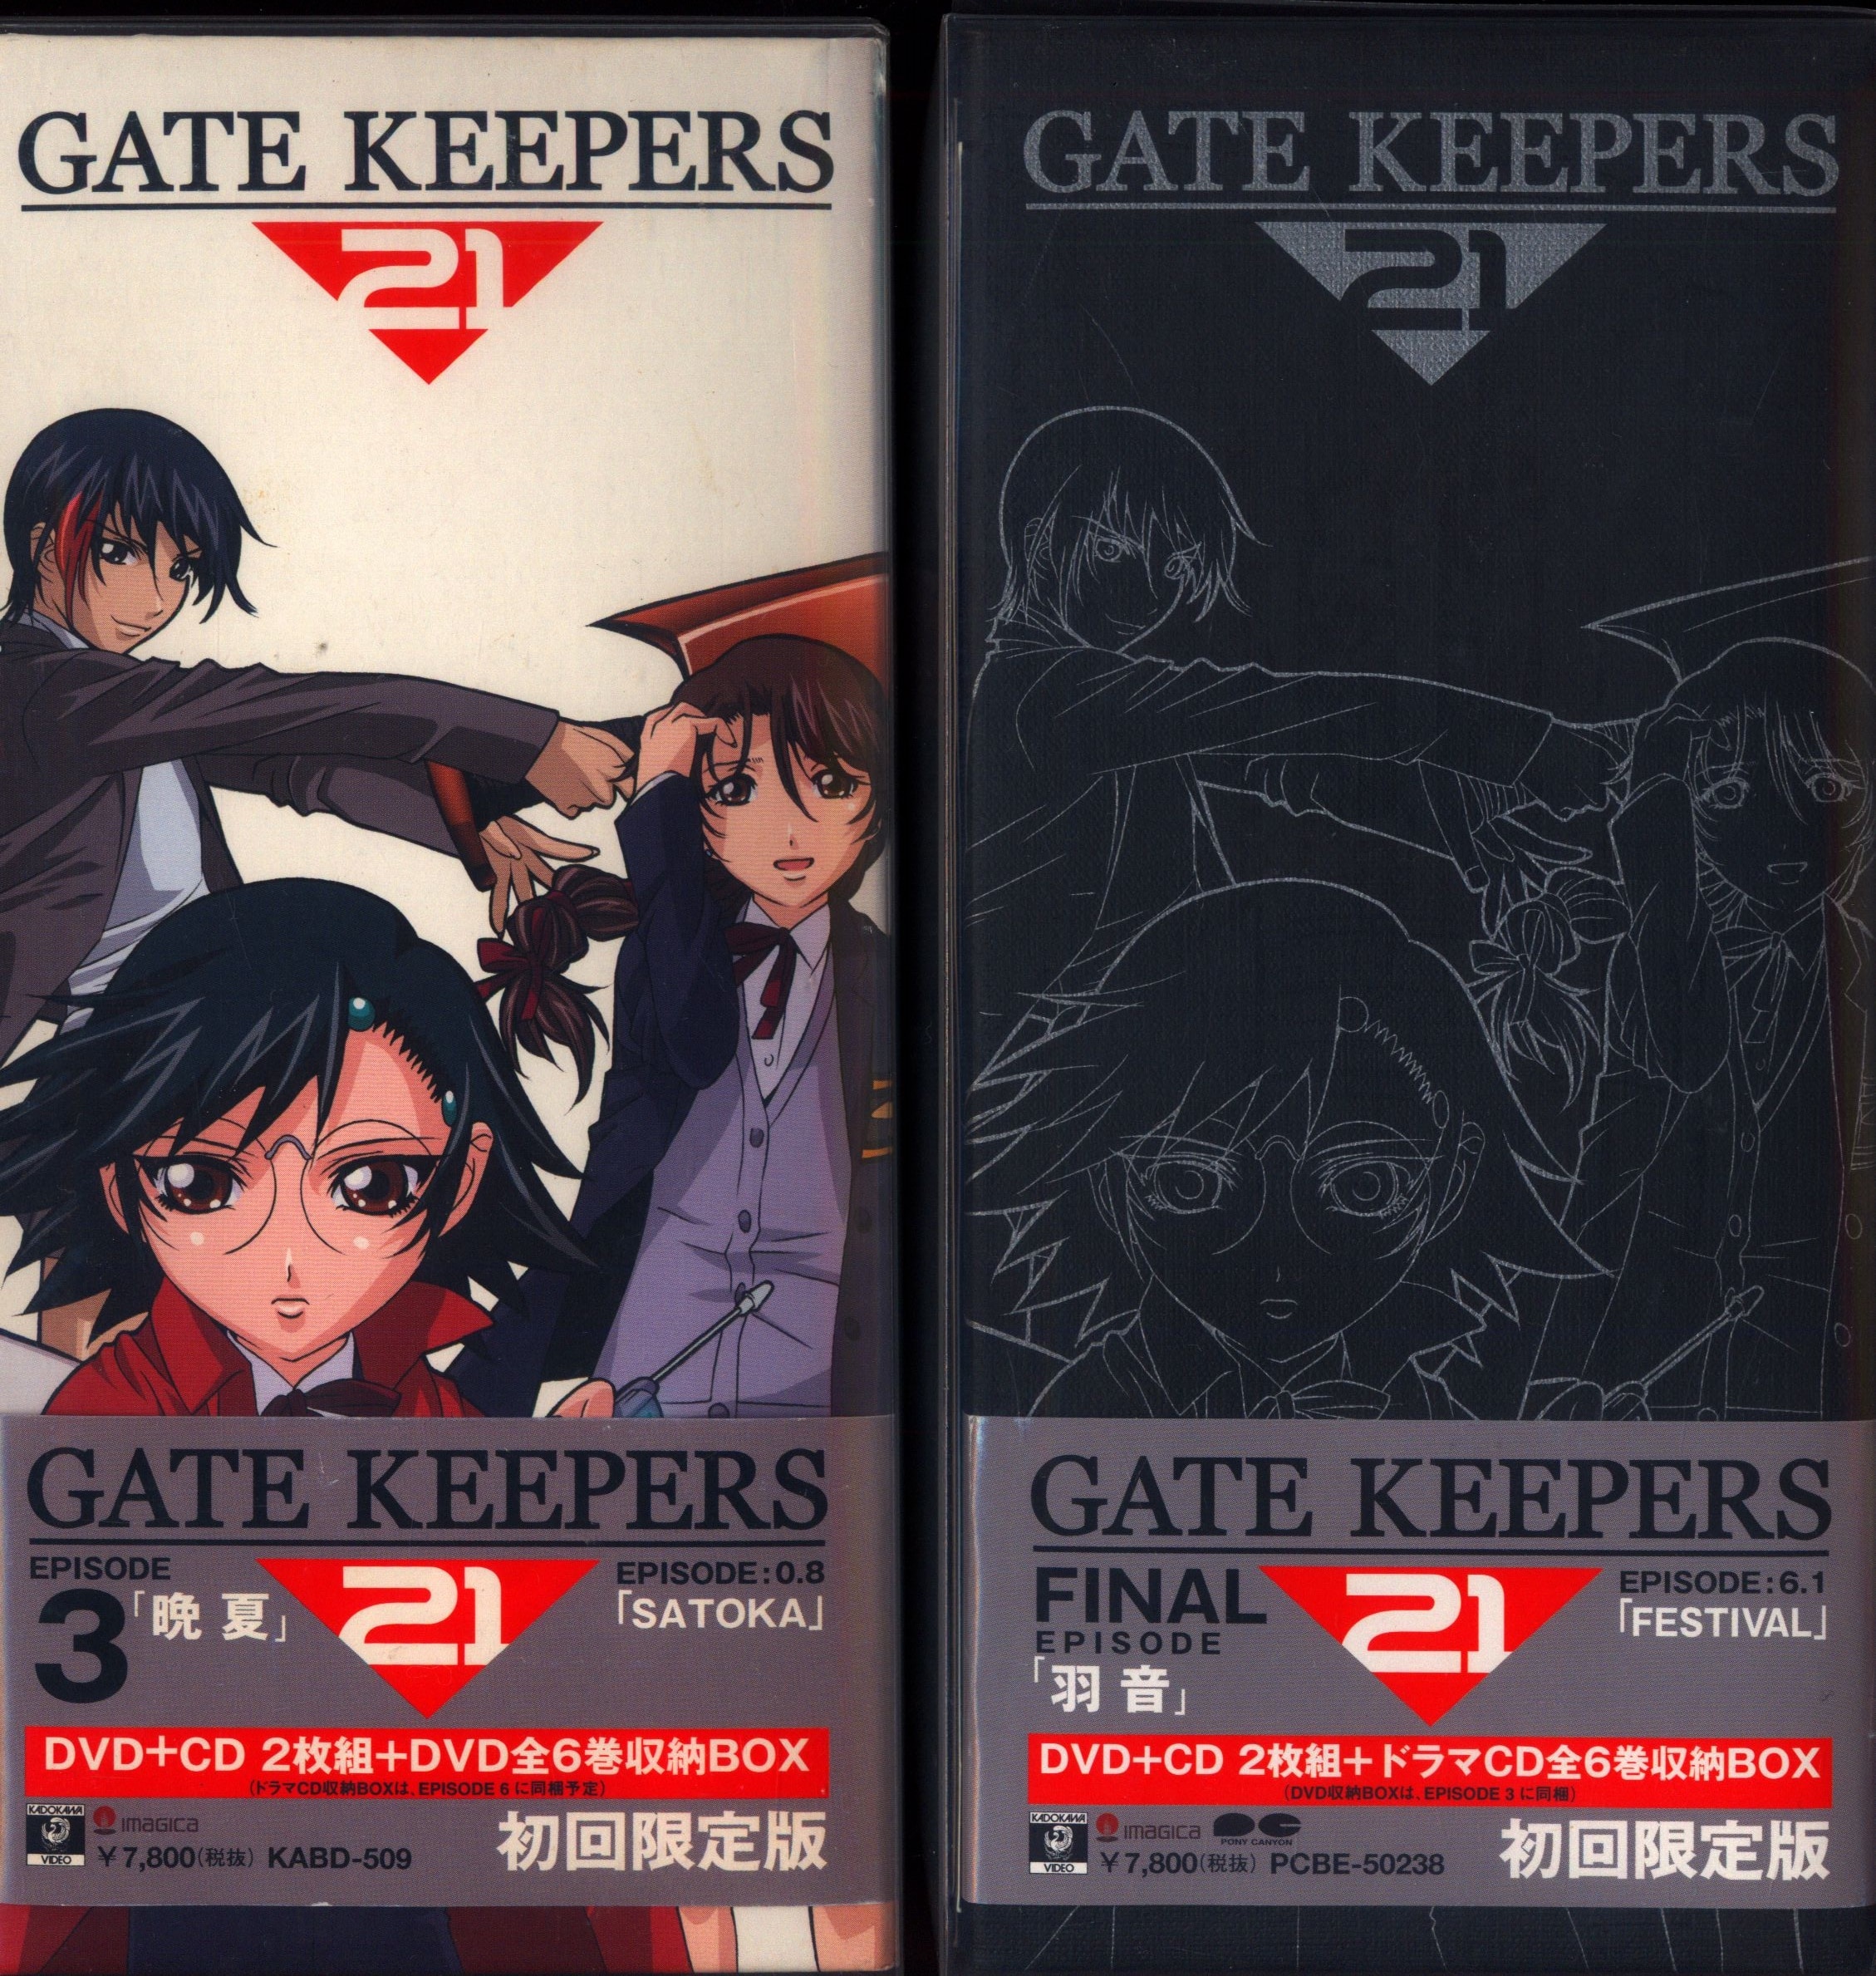 Gatekeepers 21 original soundtrack album | Music software | Suruga-ya.com